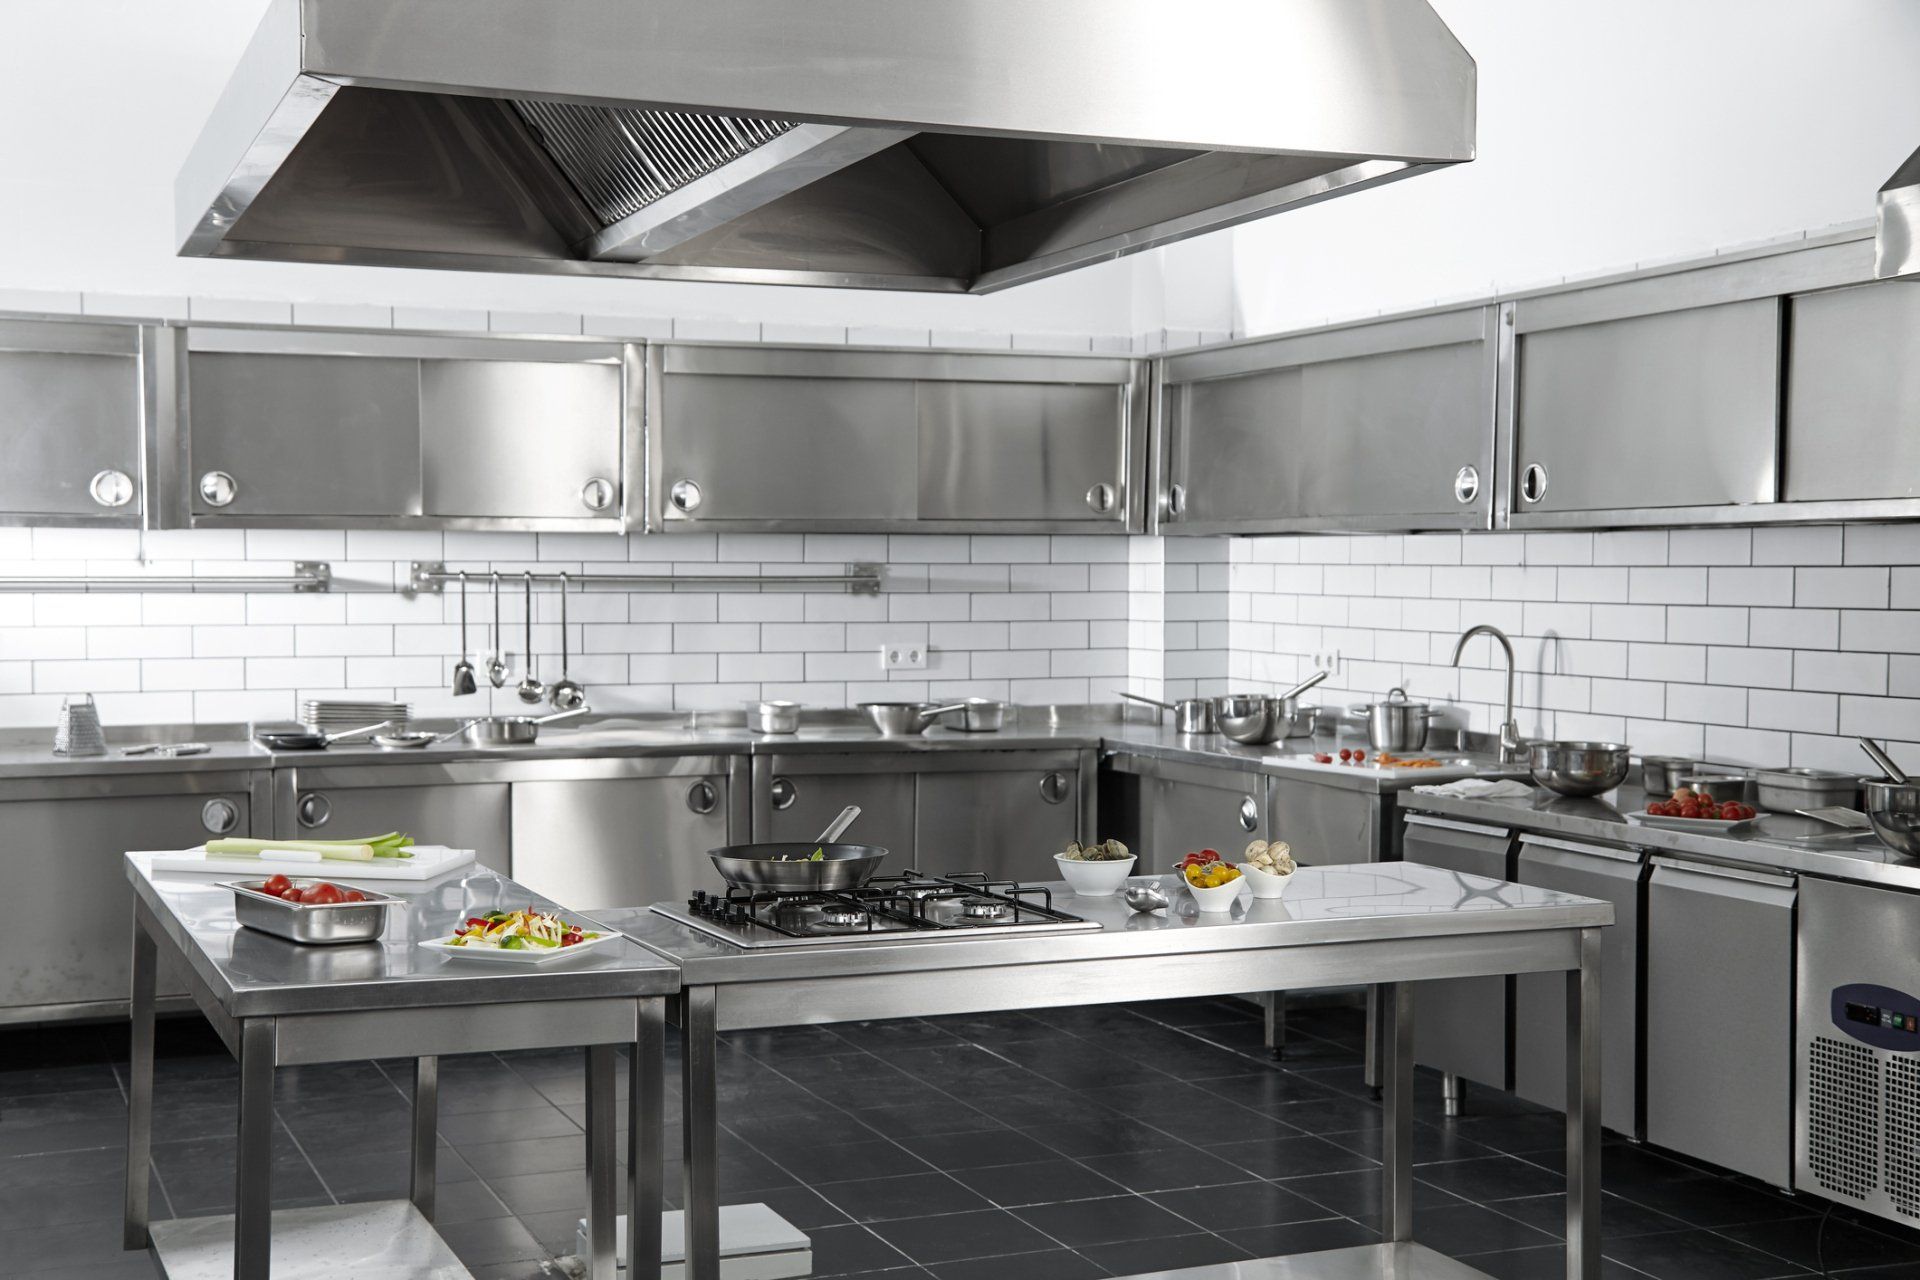 Empty Professional Kitchen - Fuquay Varina, NC - RC Commercial Equipment Repair Services Inc.